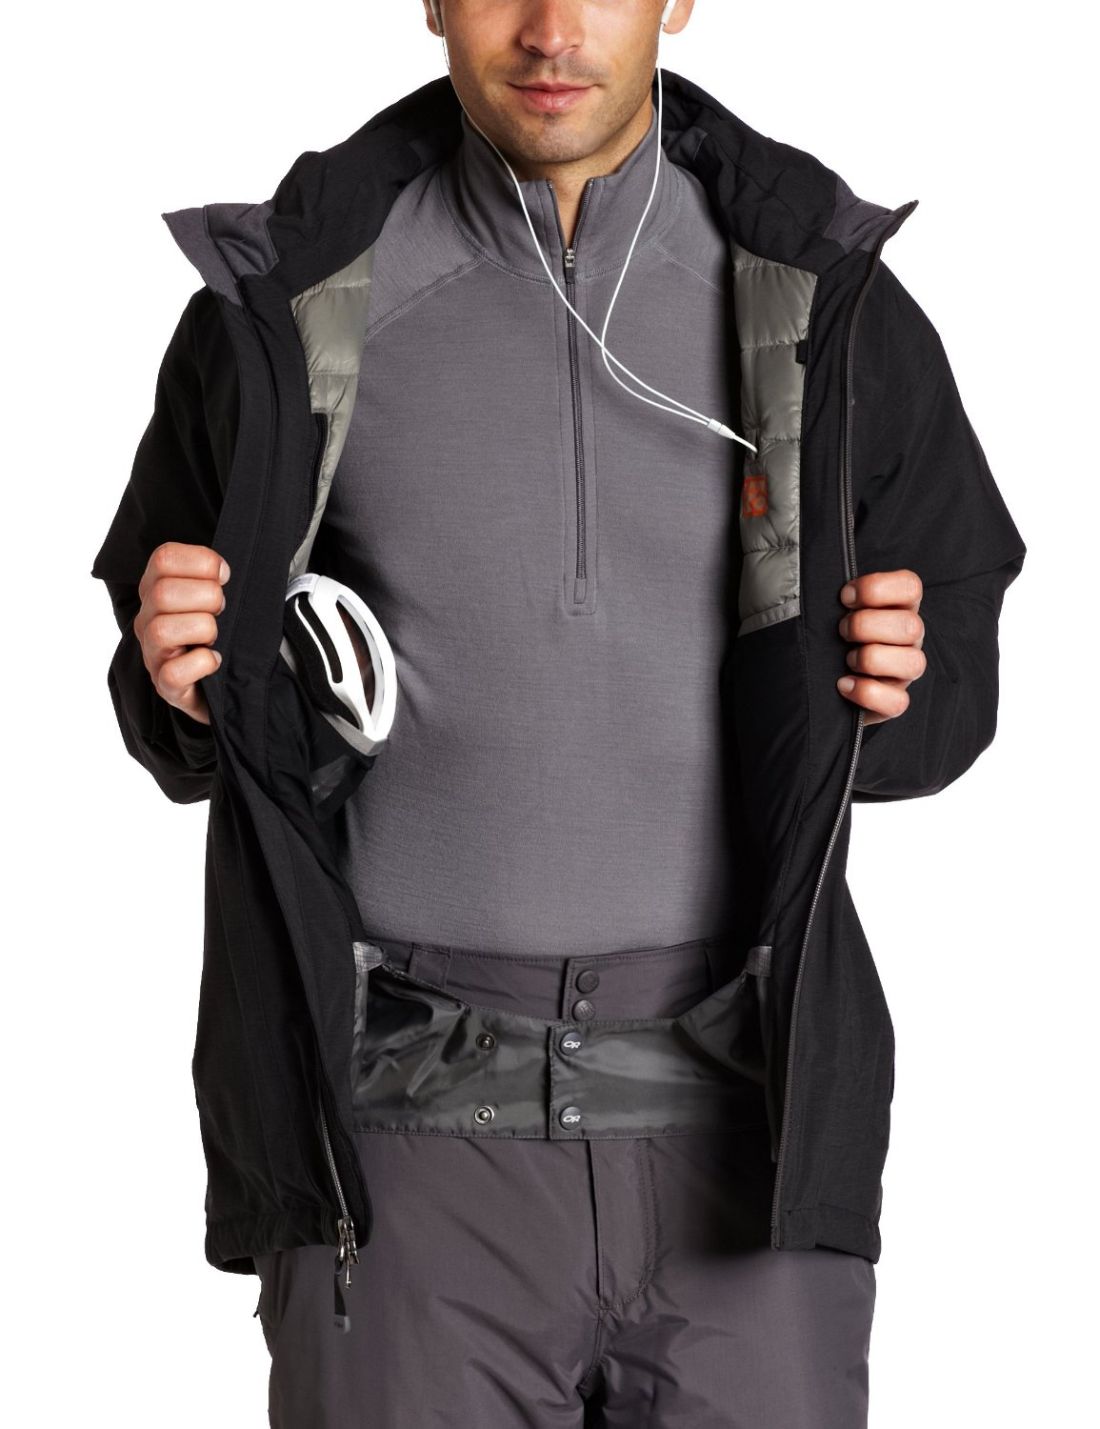 Outdoor Research - Мужская пуховая куртка Stormbound Jacket